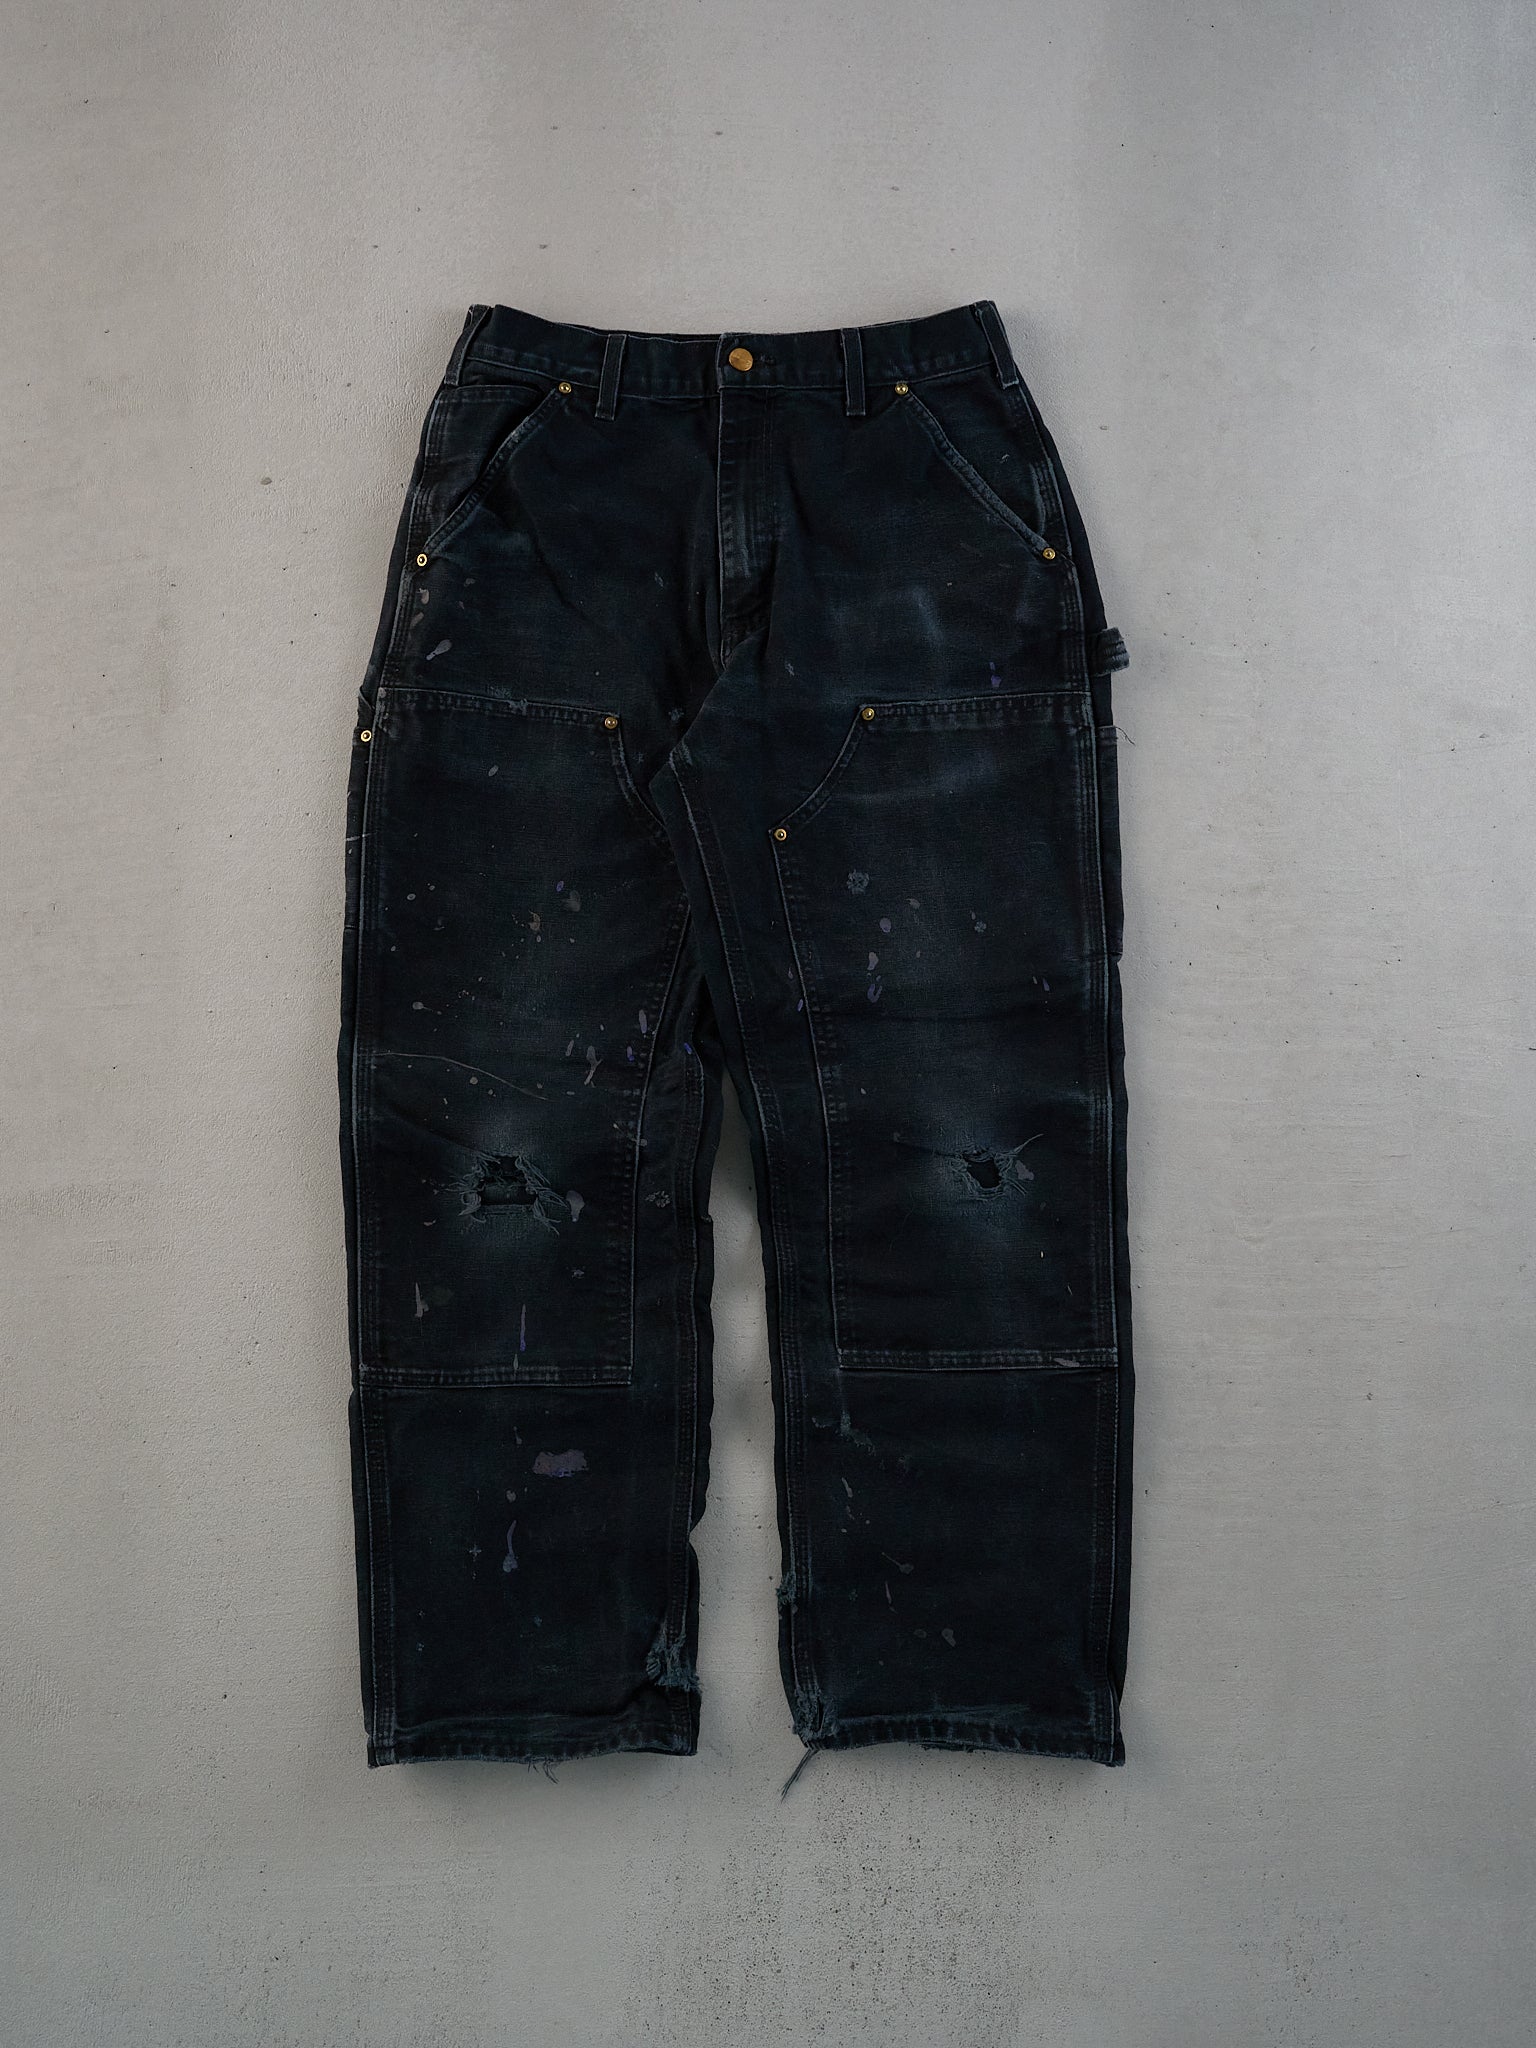 Vintage 90s Faded Black Carhartt Double Knee Carpenter Pants (29x29)